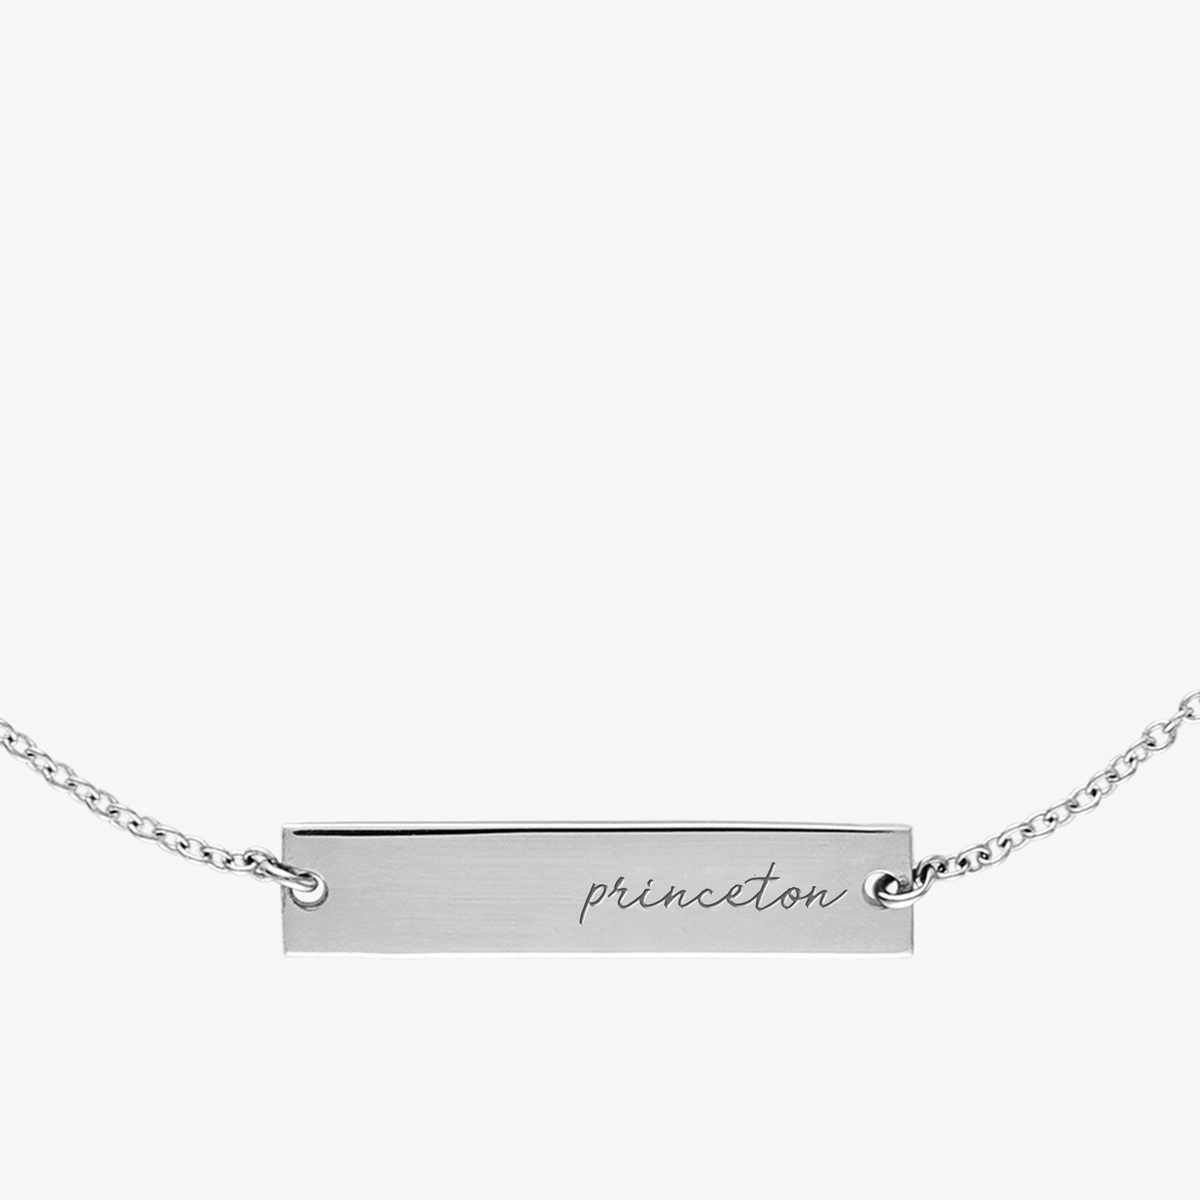 Princeton University Horizontal Necklace Sterling Silver Close Up